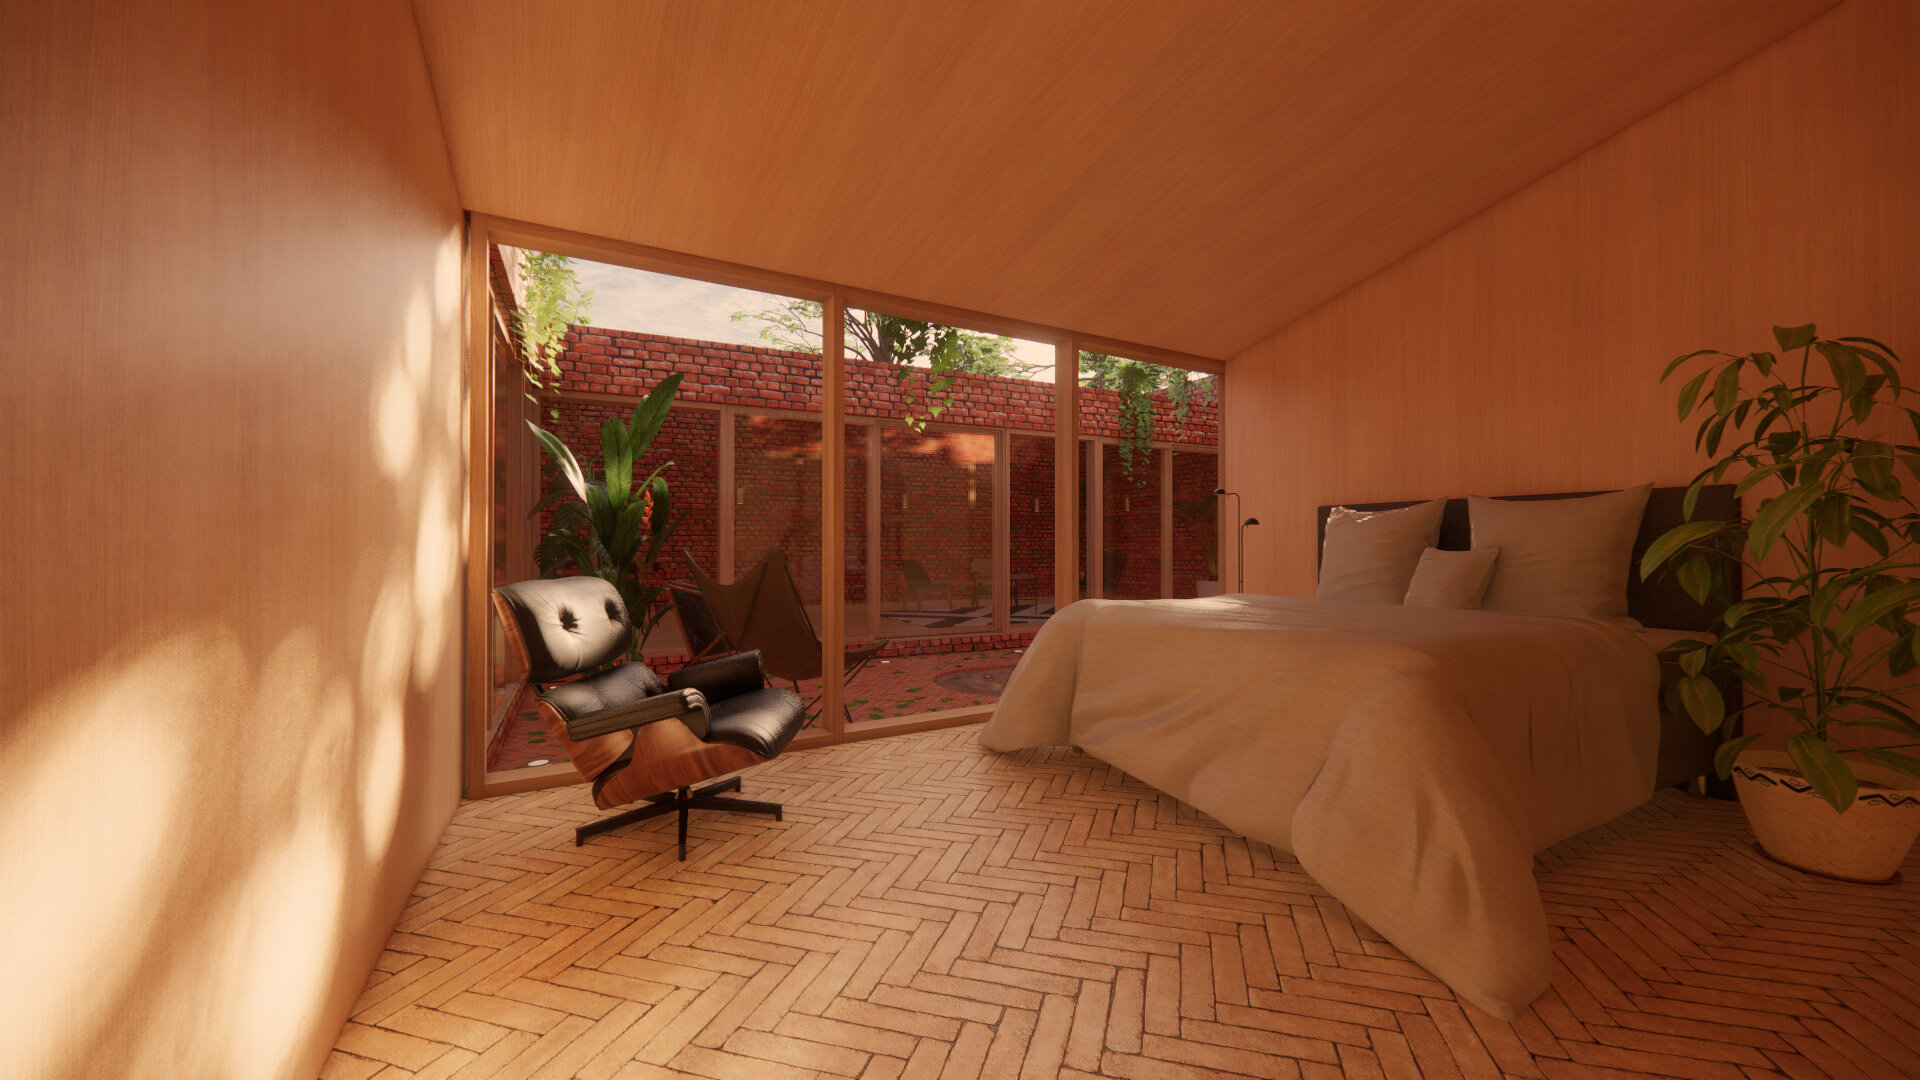 Bedroom - Solar Courtyard House - Beverley Architects - Samuel Kendall Associates